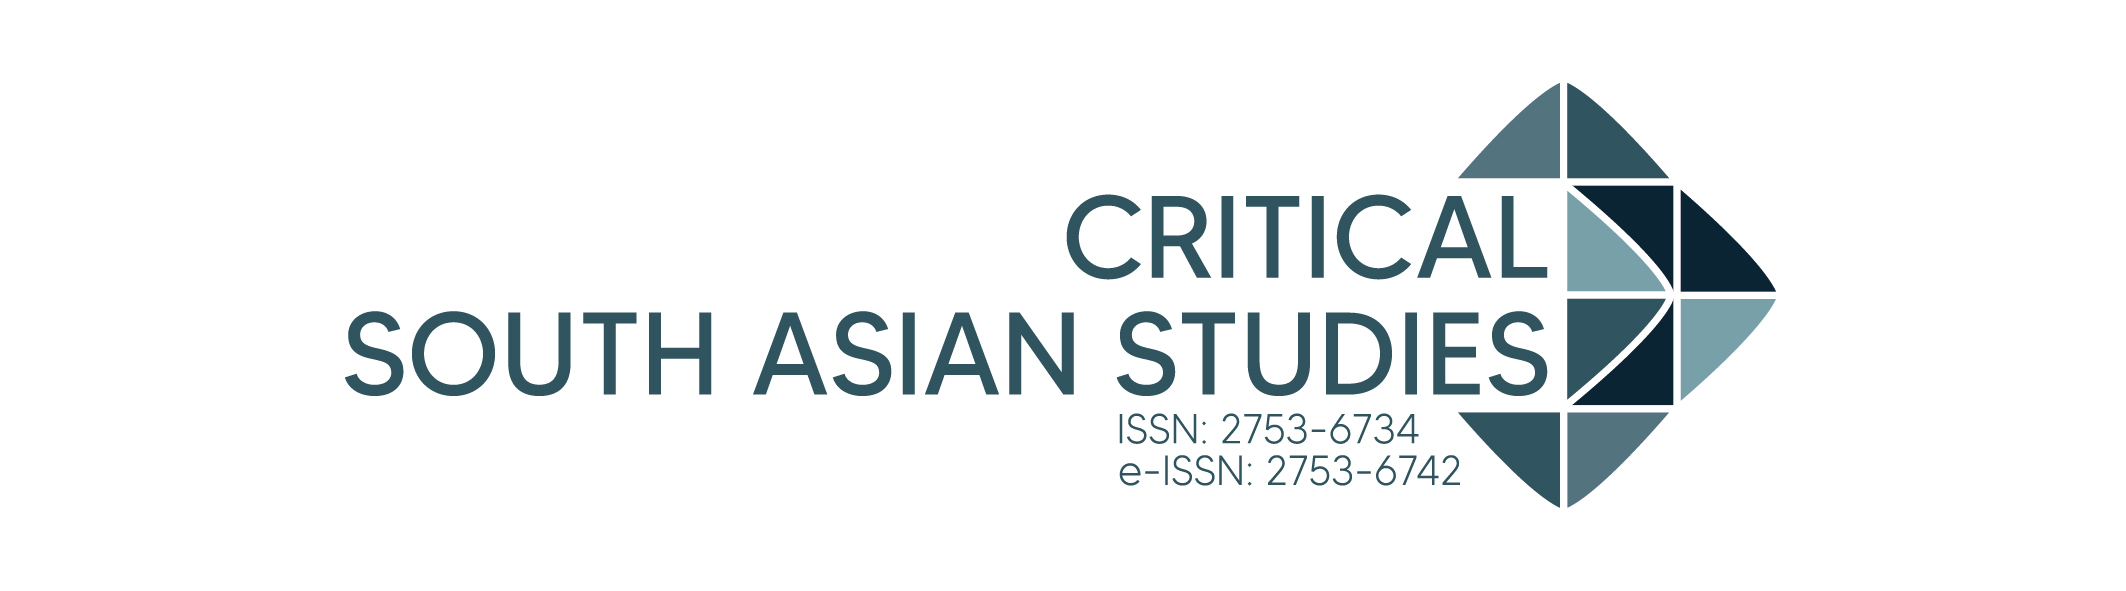 Critical South Asian Studies logo